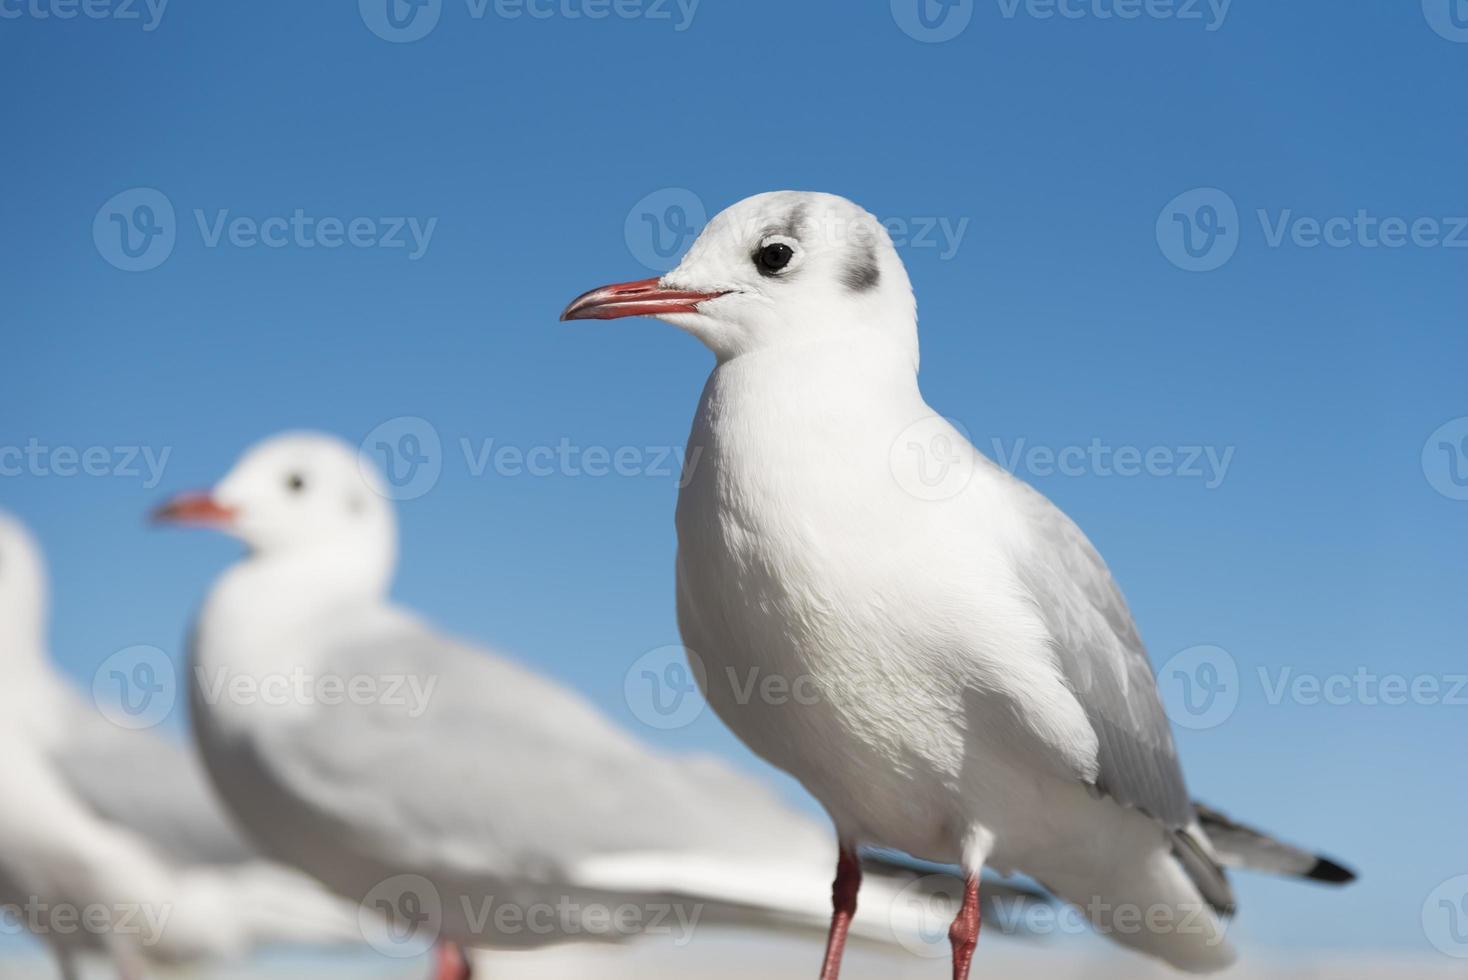 vita måsfåglar i ögonfokus, selektivt fokus foto